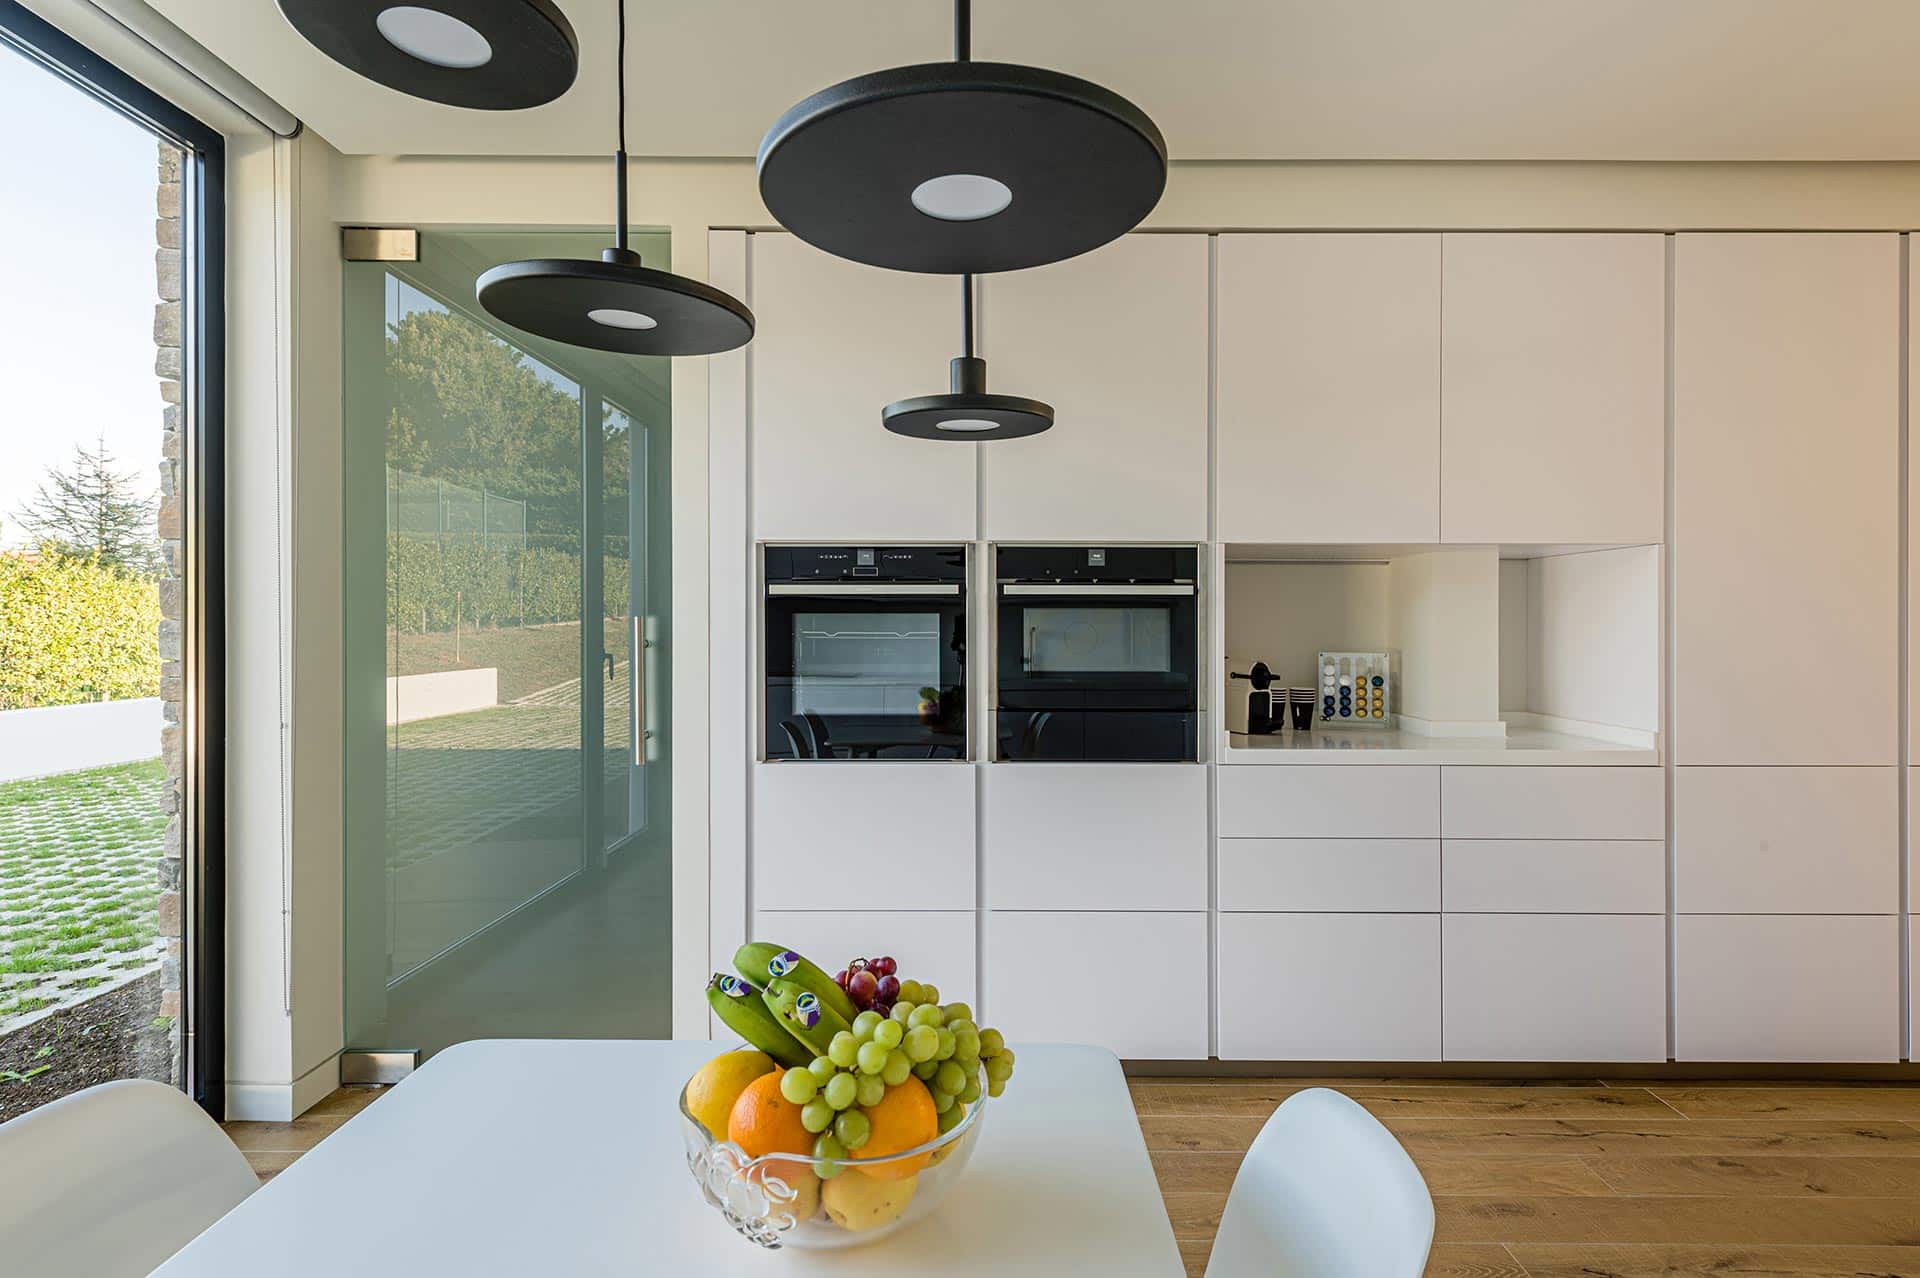 Interior de cocina blanca con lampara negra en vivienda moderna diseñada por Moah Arquitectos en Cantabria